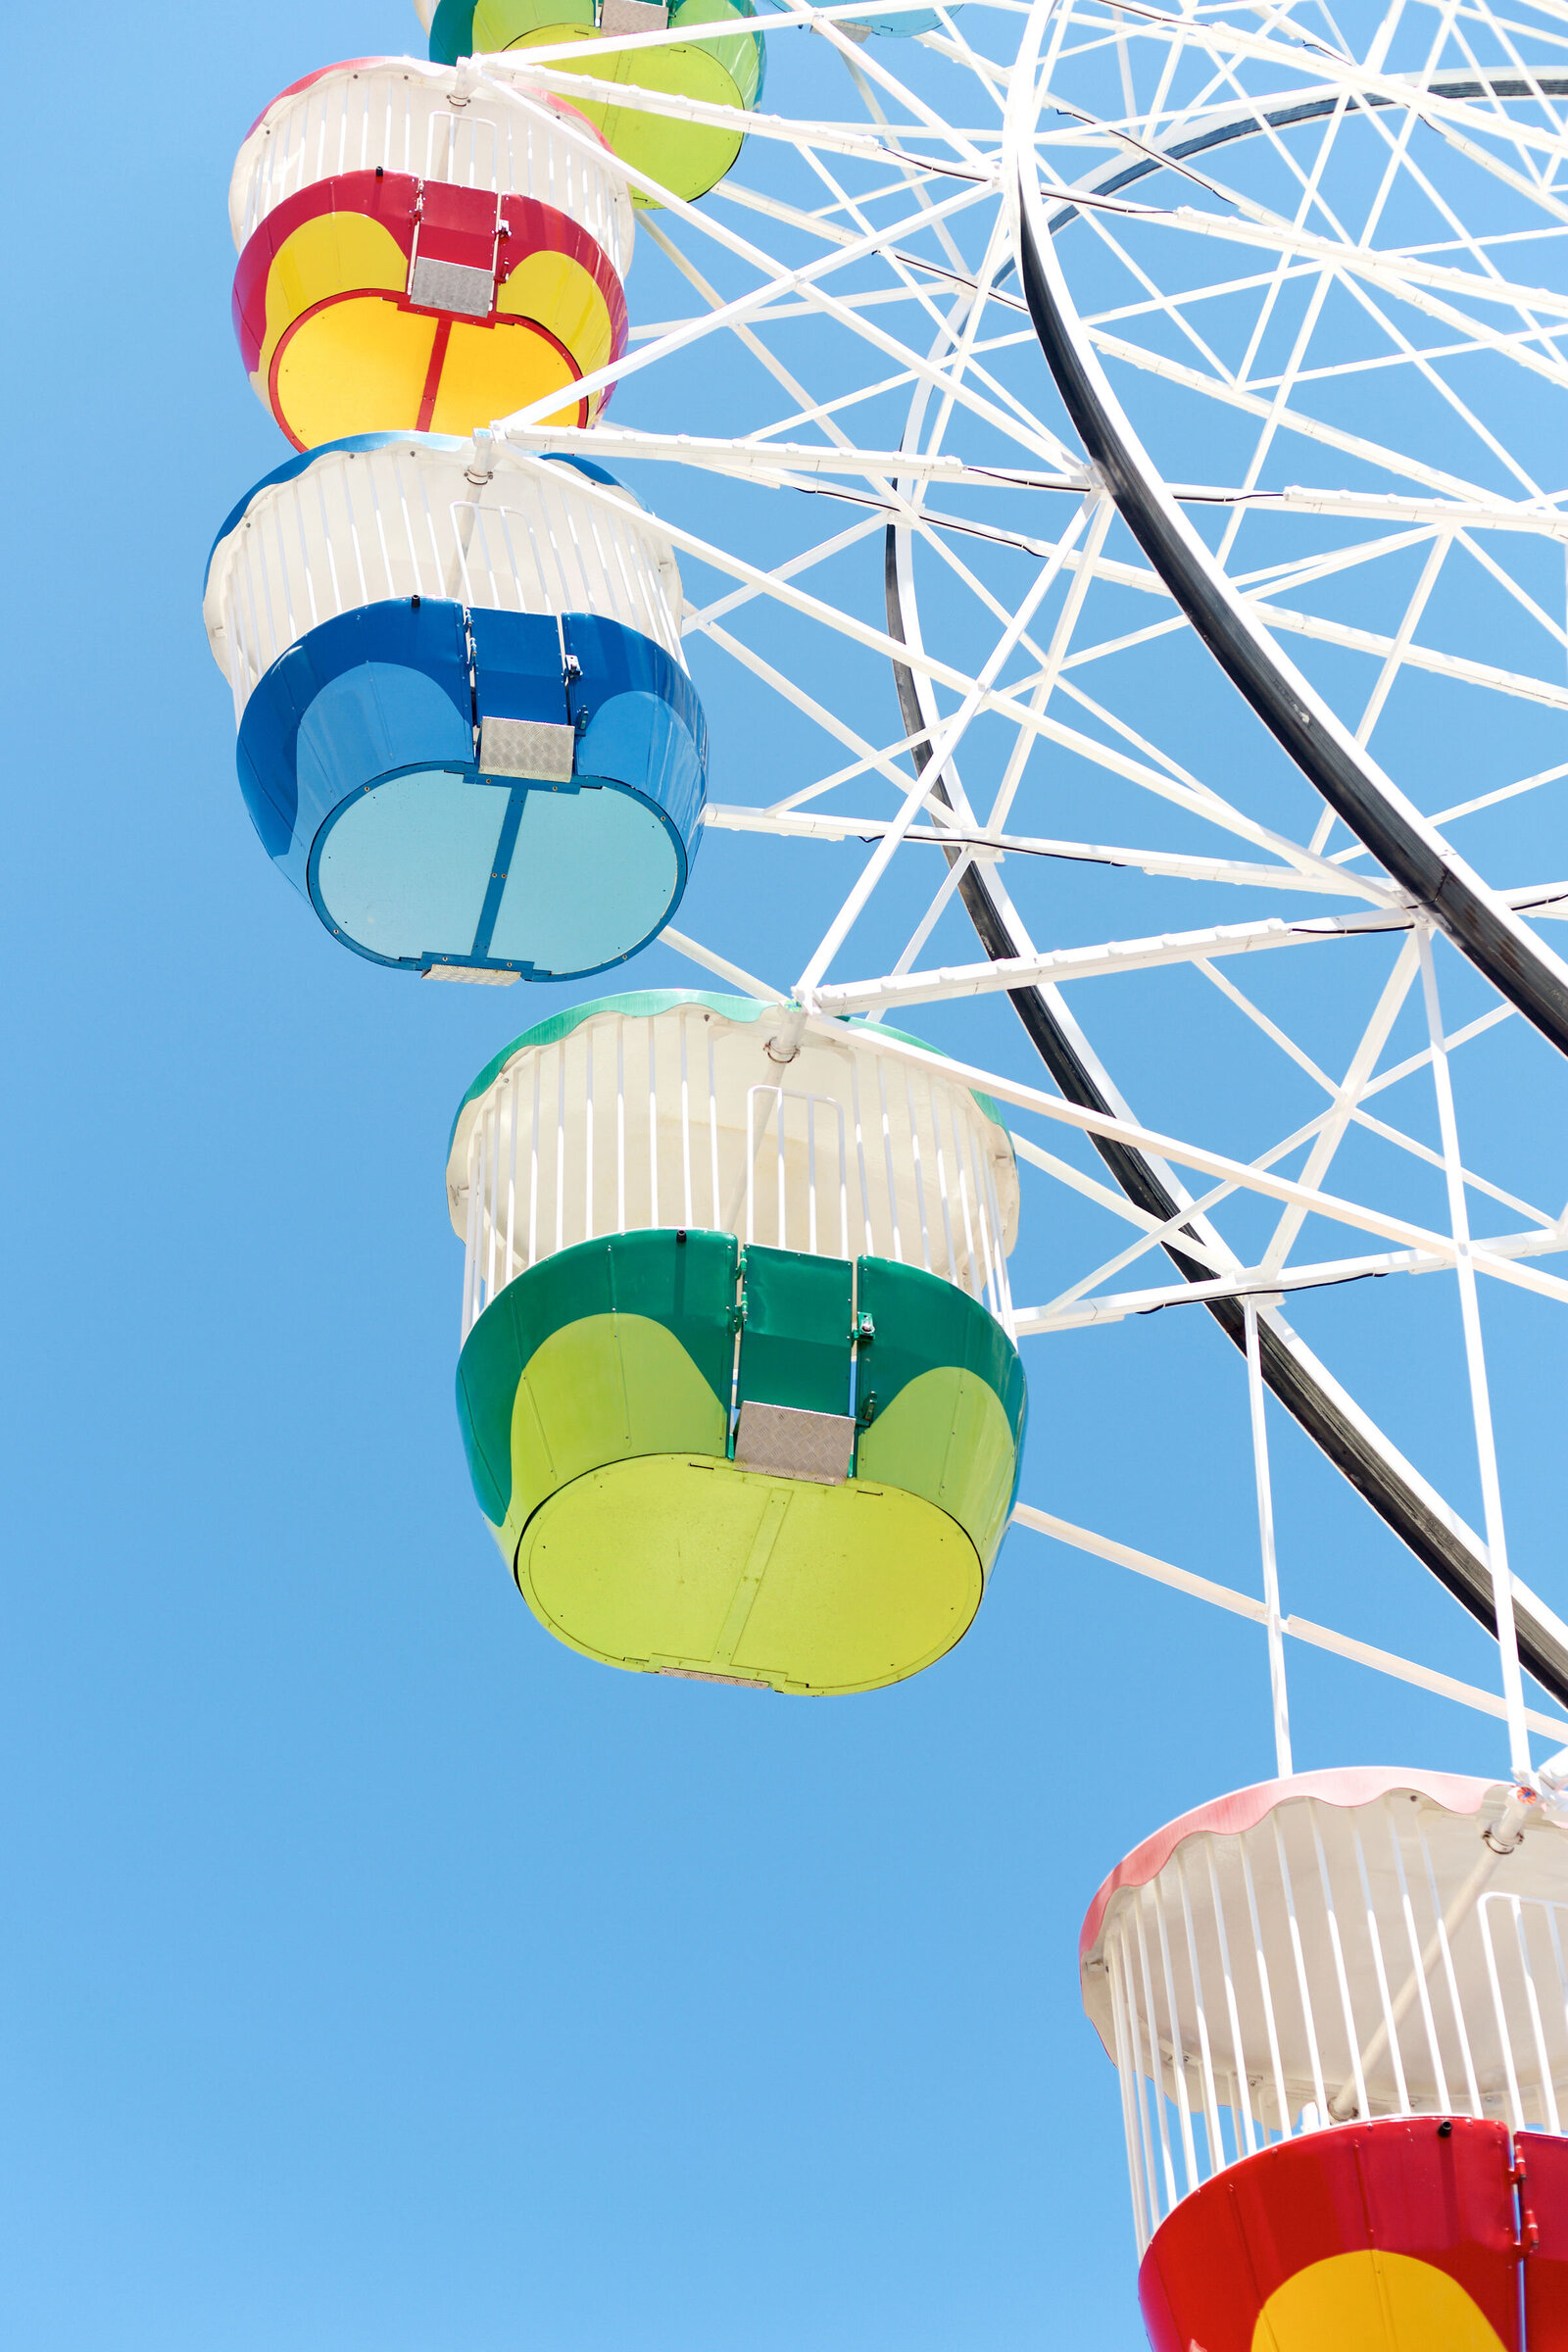 Chelsea Loren branding travel tourism photographer capturing Luna Park ferris wheel colorful baskets in the sky on a blue backdrop in Sydney, Australia